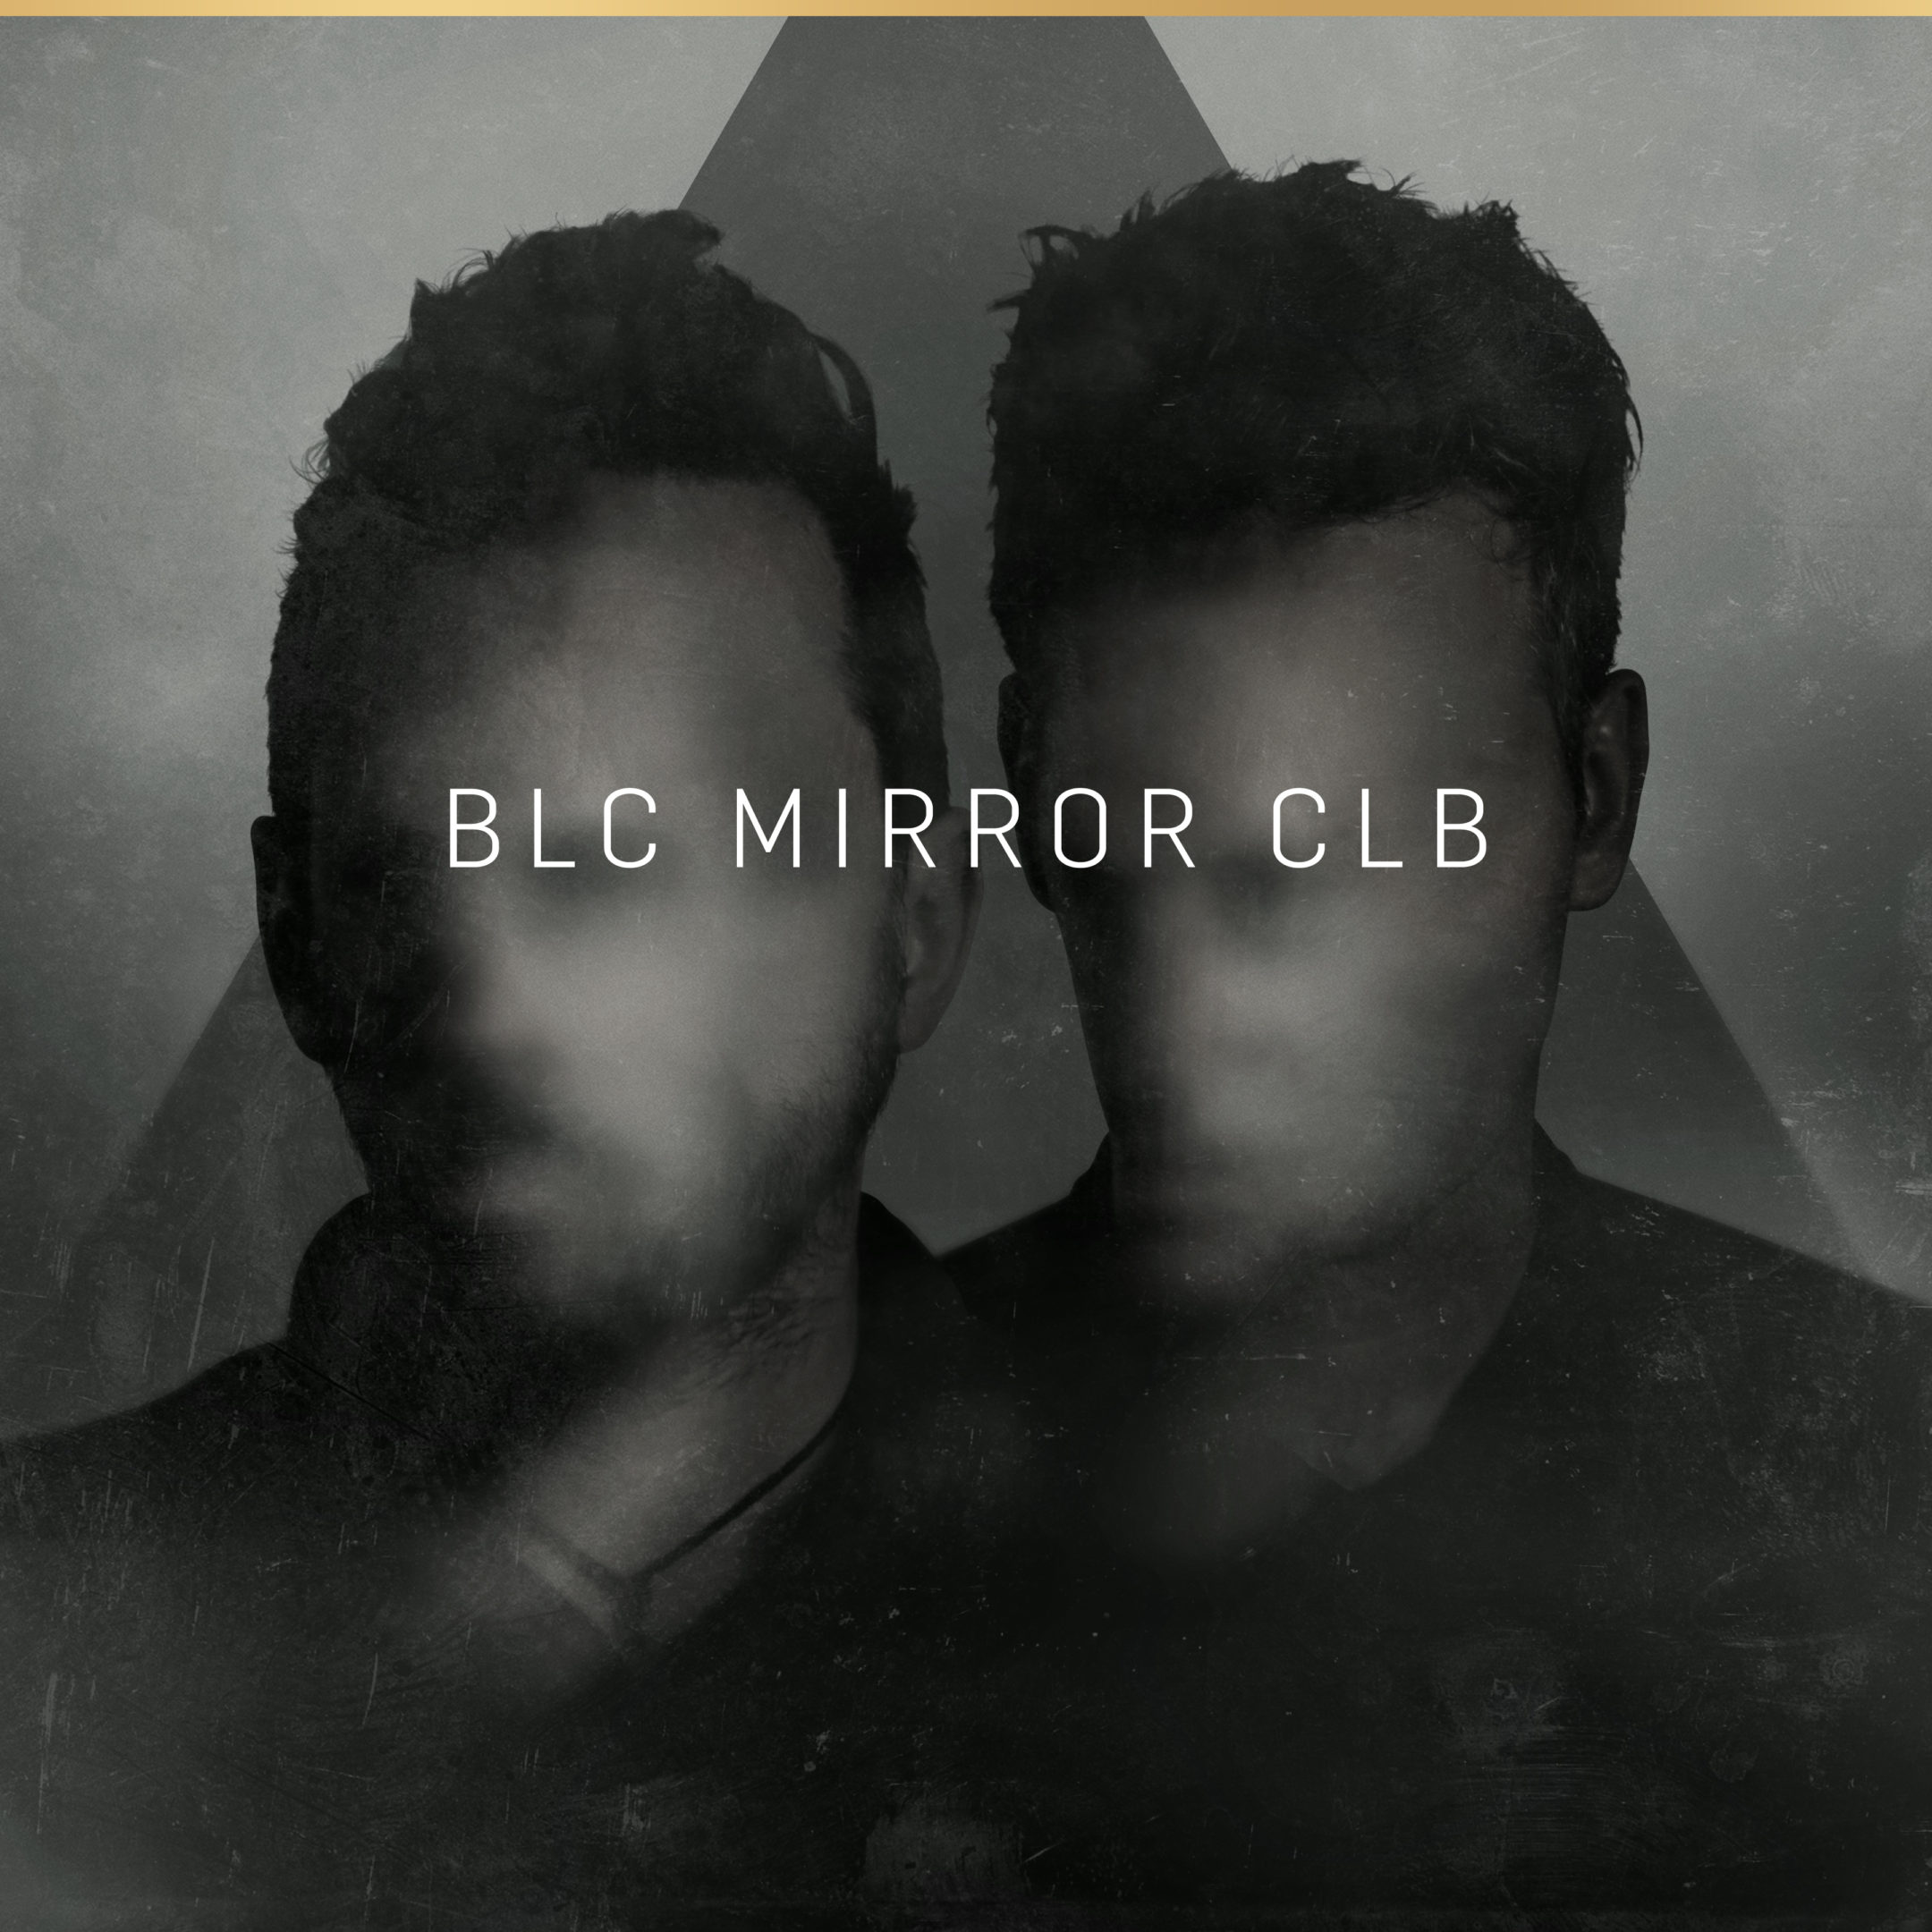 Album promo photo for BLC MIRROR CLB.